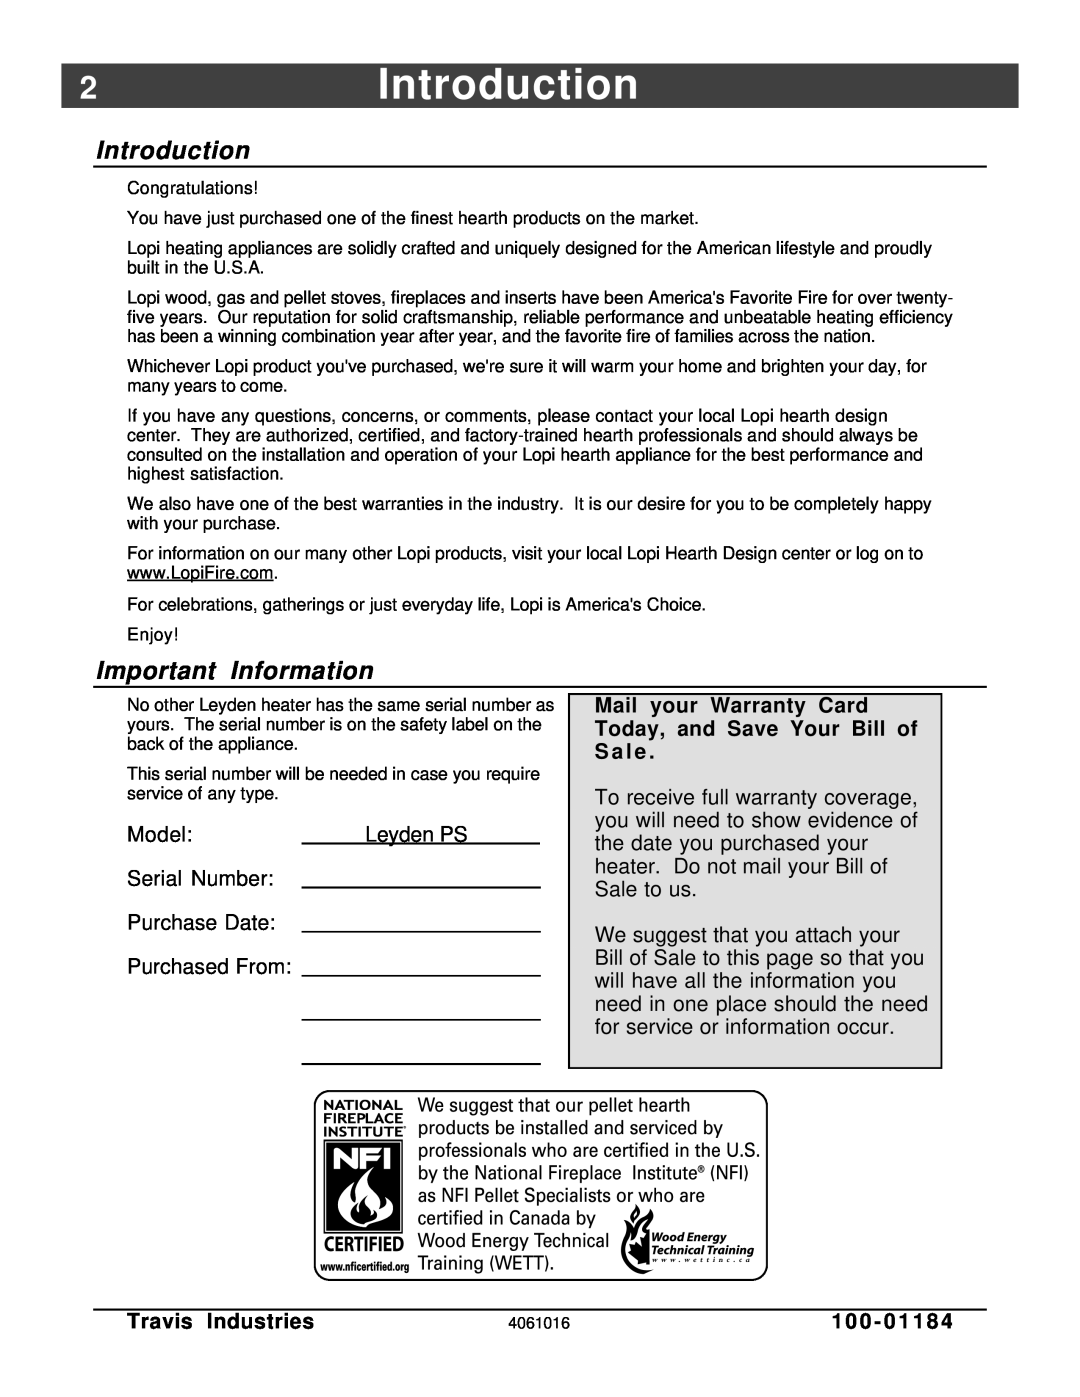 Lopi Leyden Pellet Stove manual 2Introduction, Important Information, Travis Industries, 1 0 0 